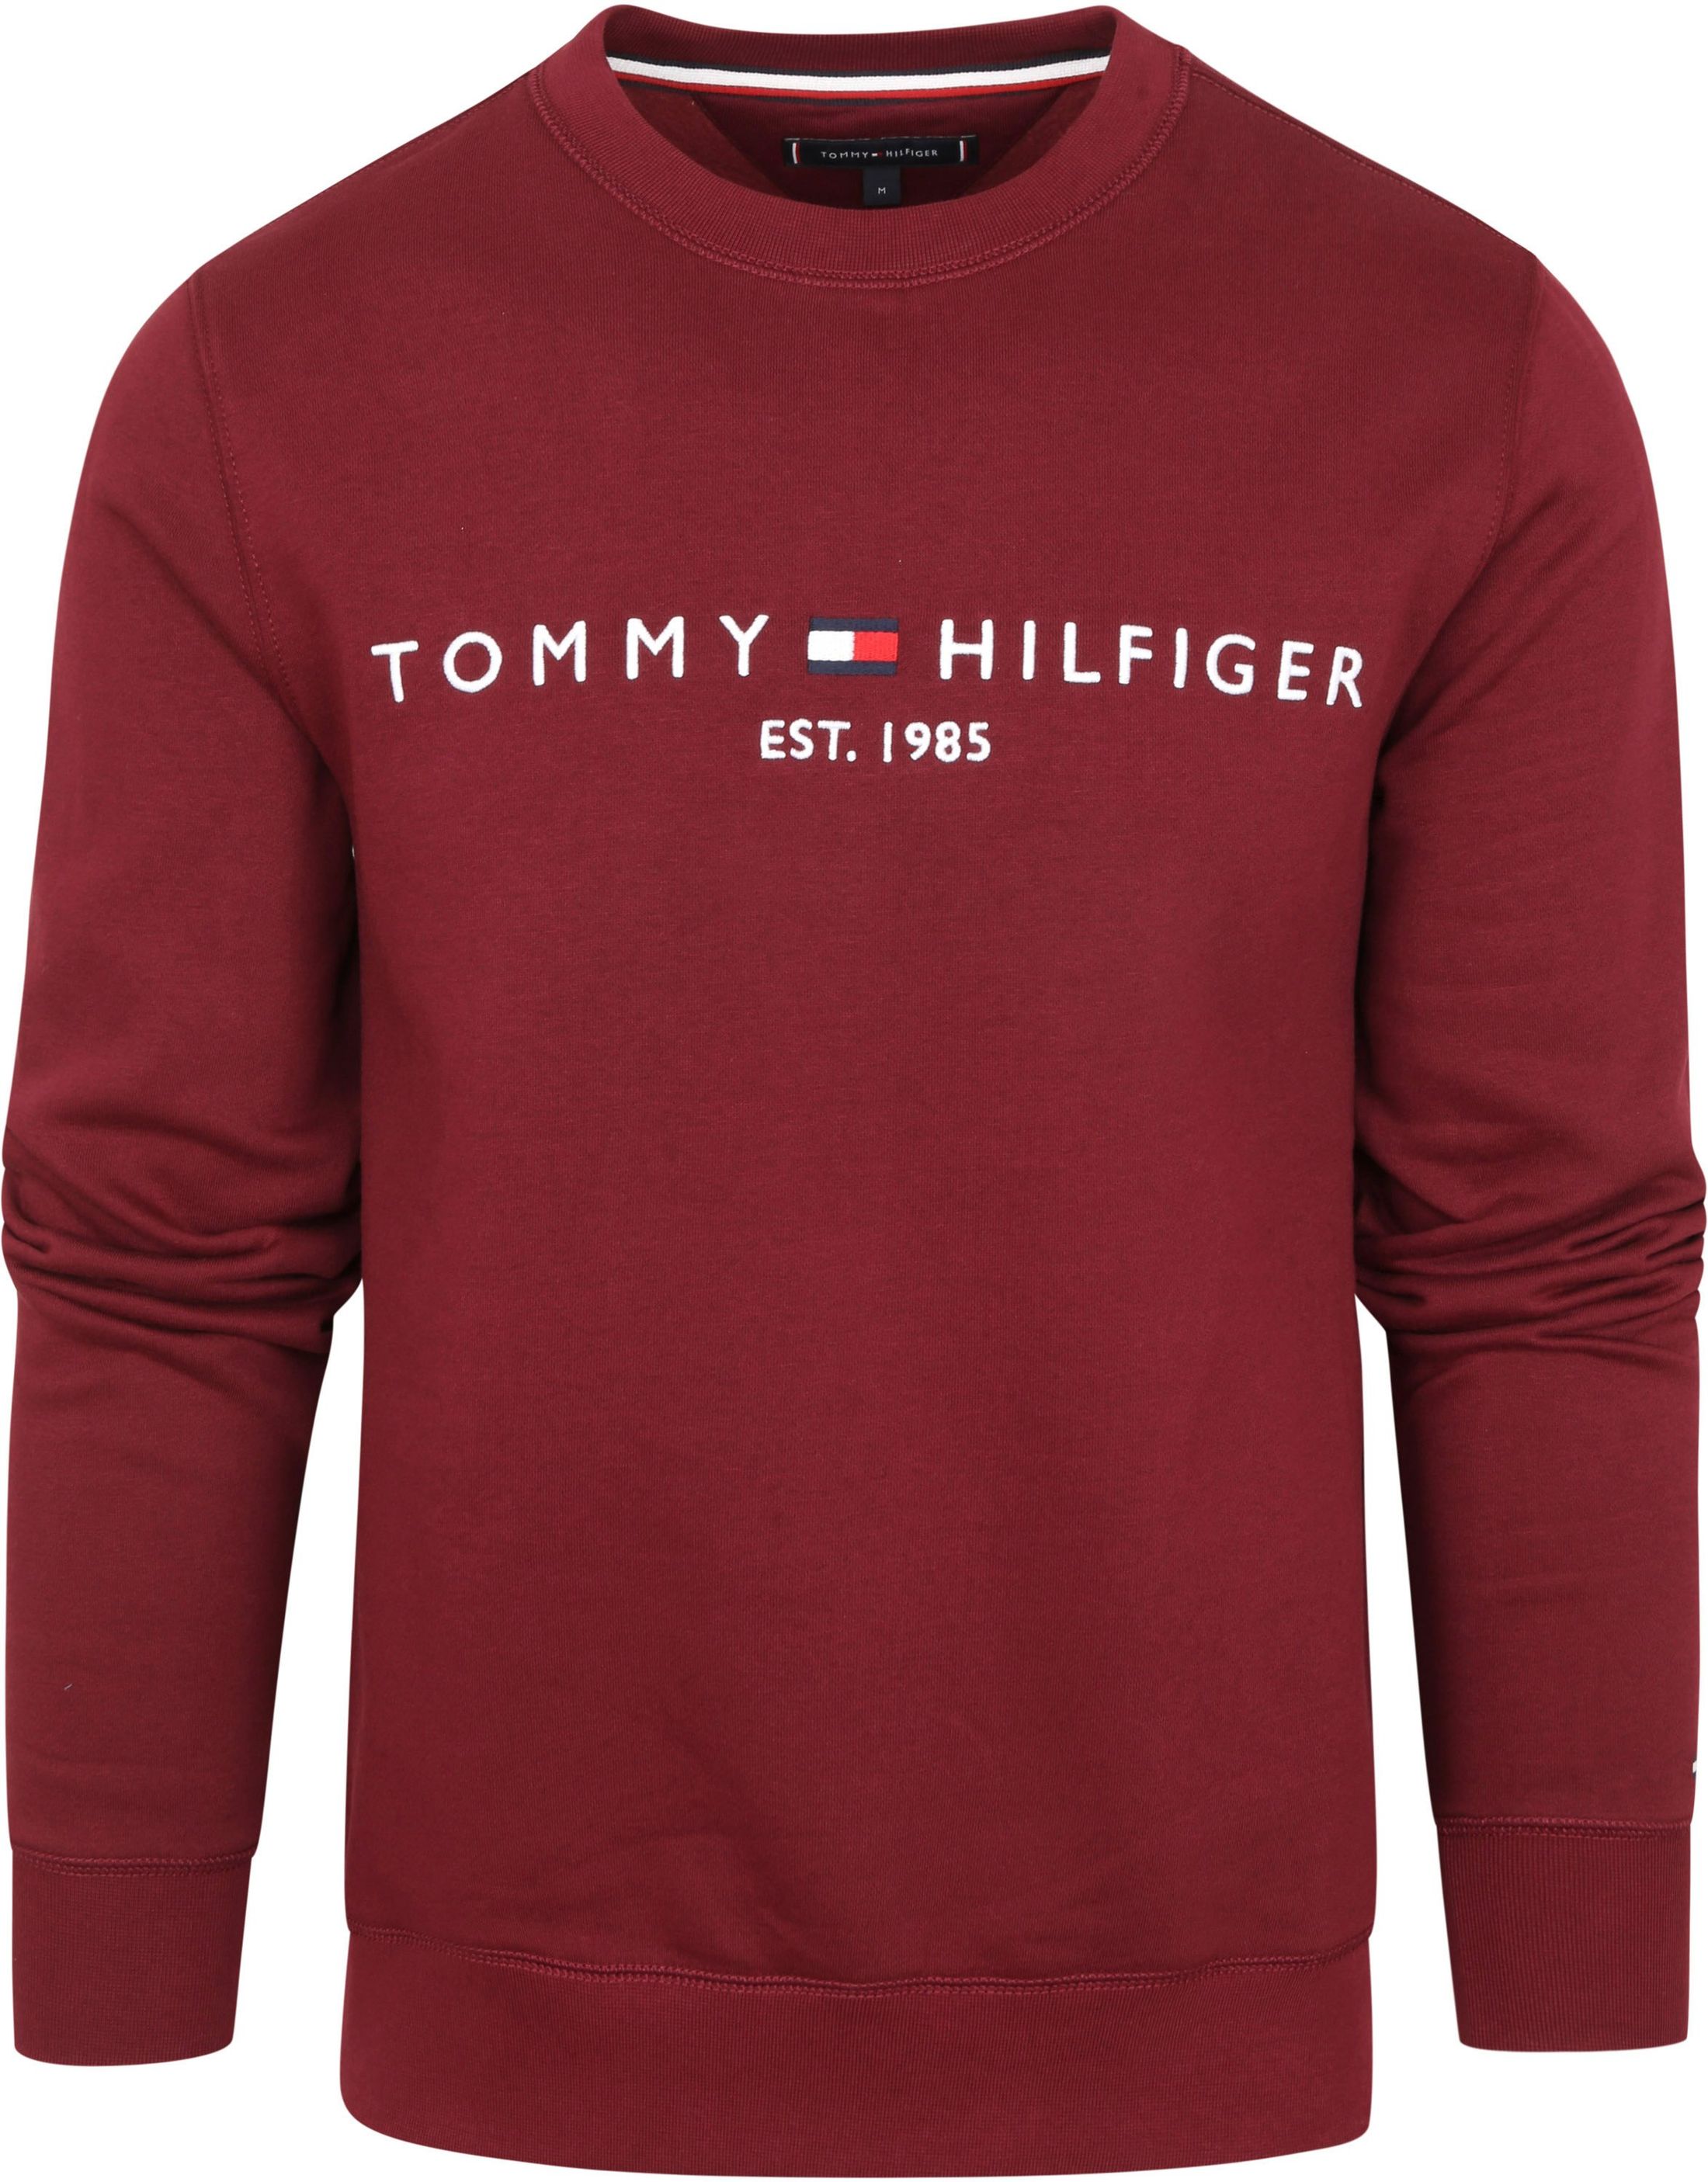 Tommy Hilfiger Sweater Logo Bordeaux Burgundy size L